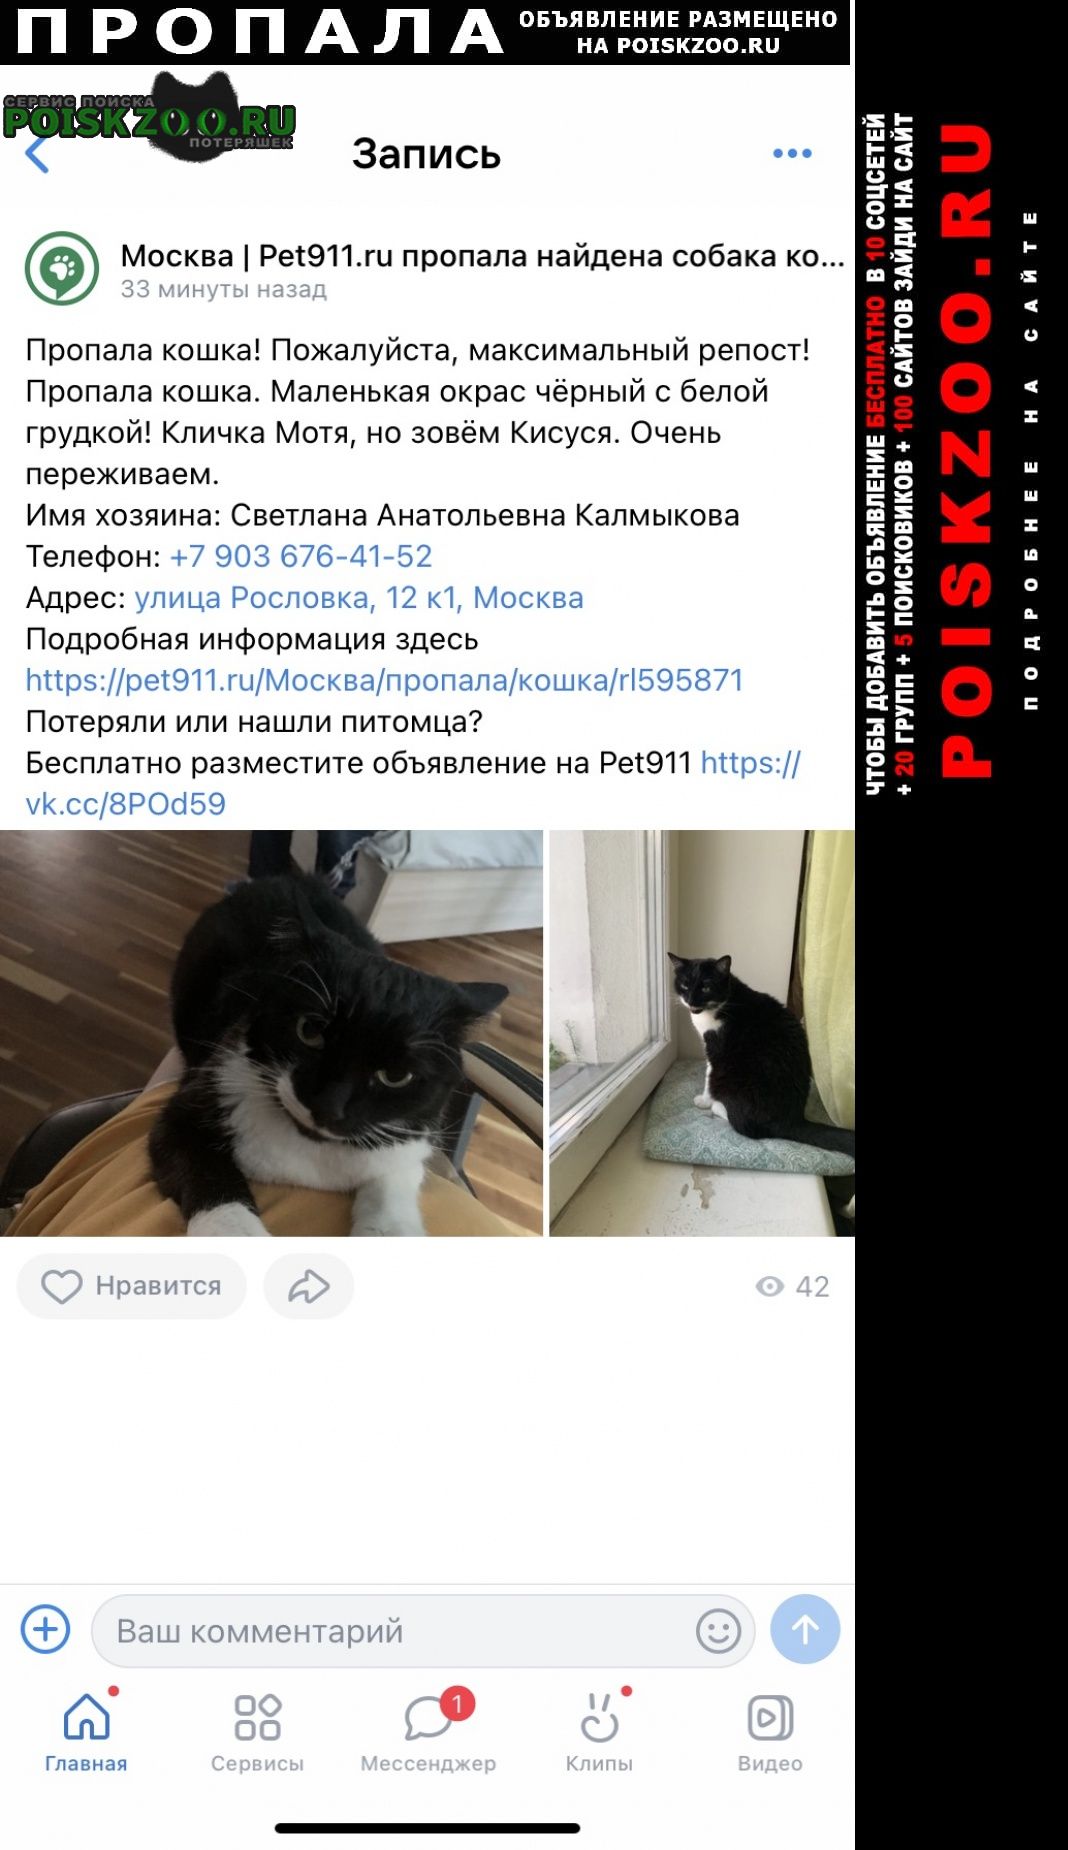 Пропала кошка митино кршка Москва